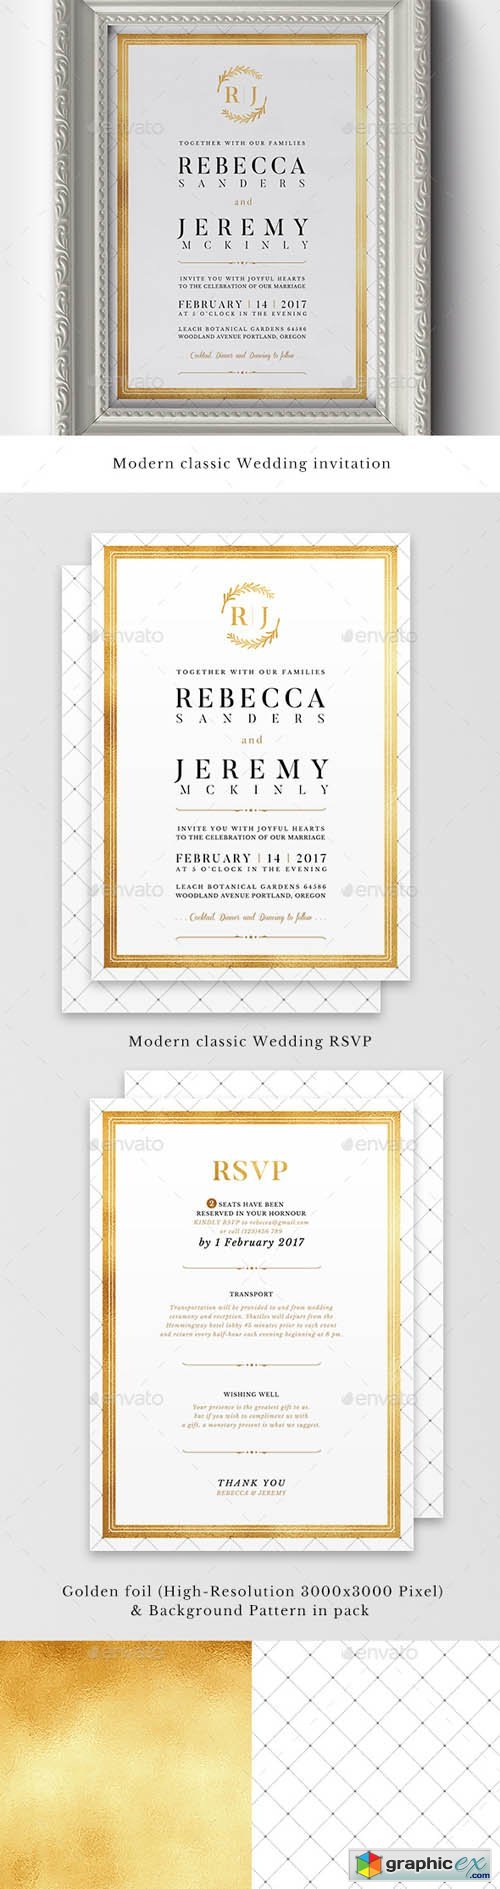 Modern Classic Wedding Invitations 